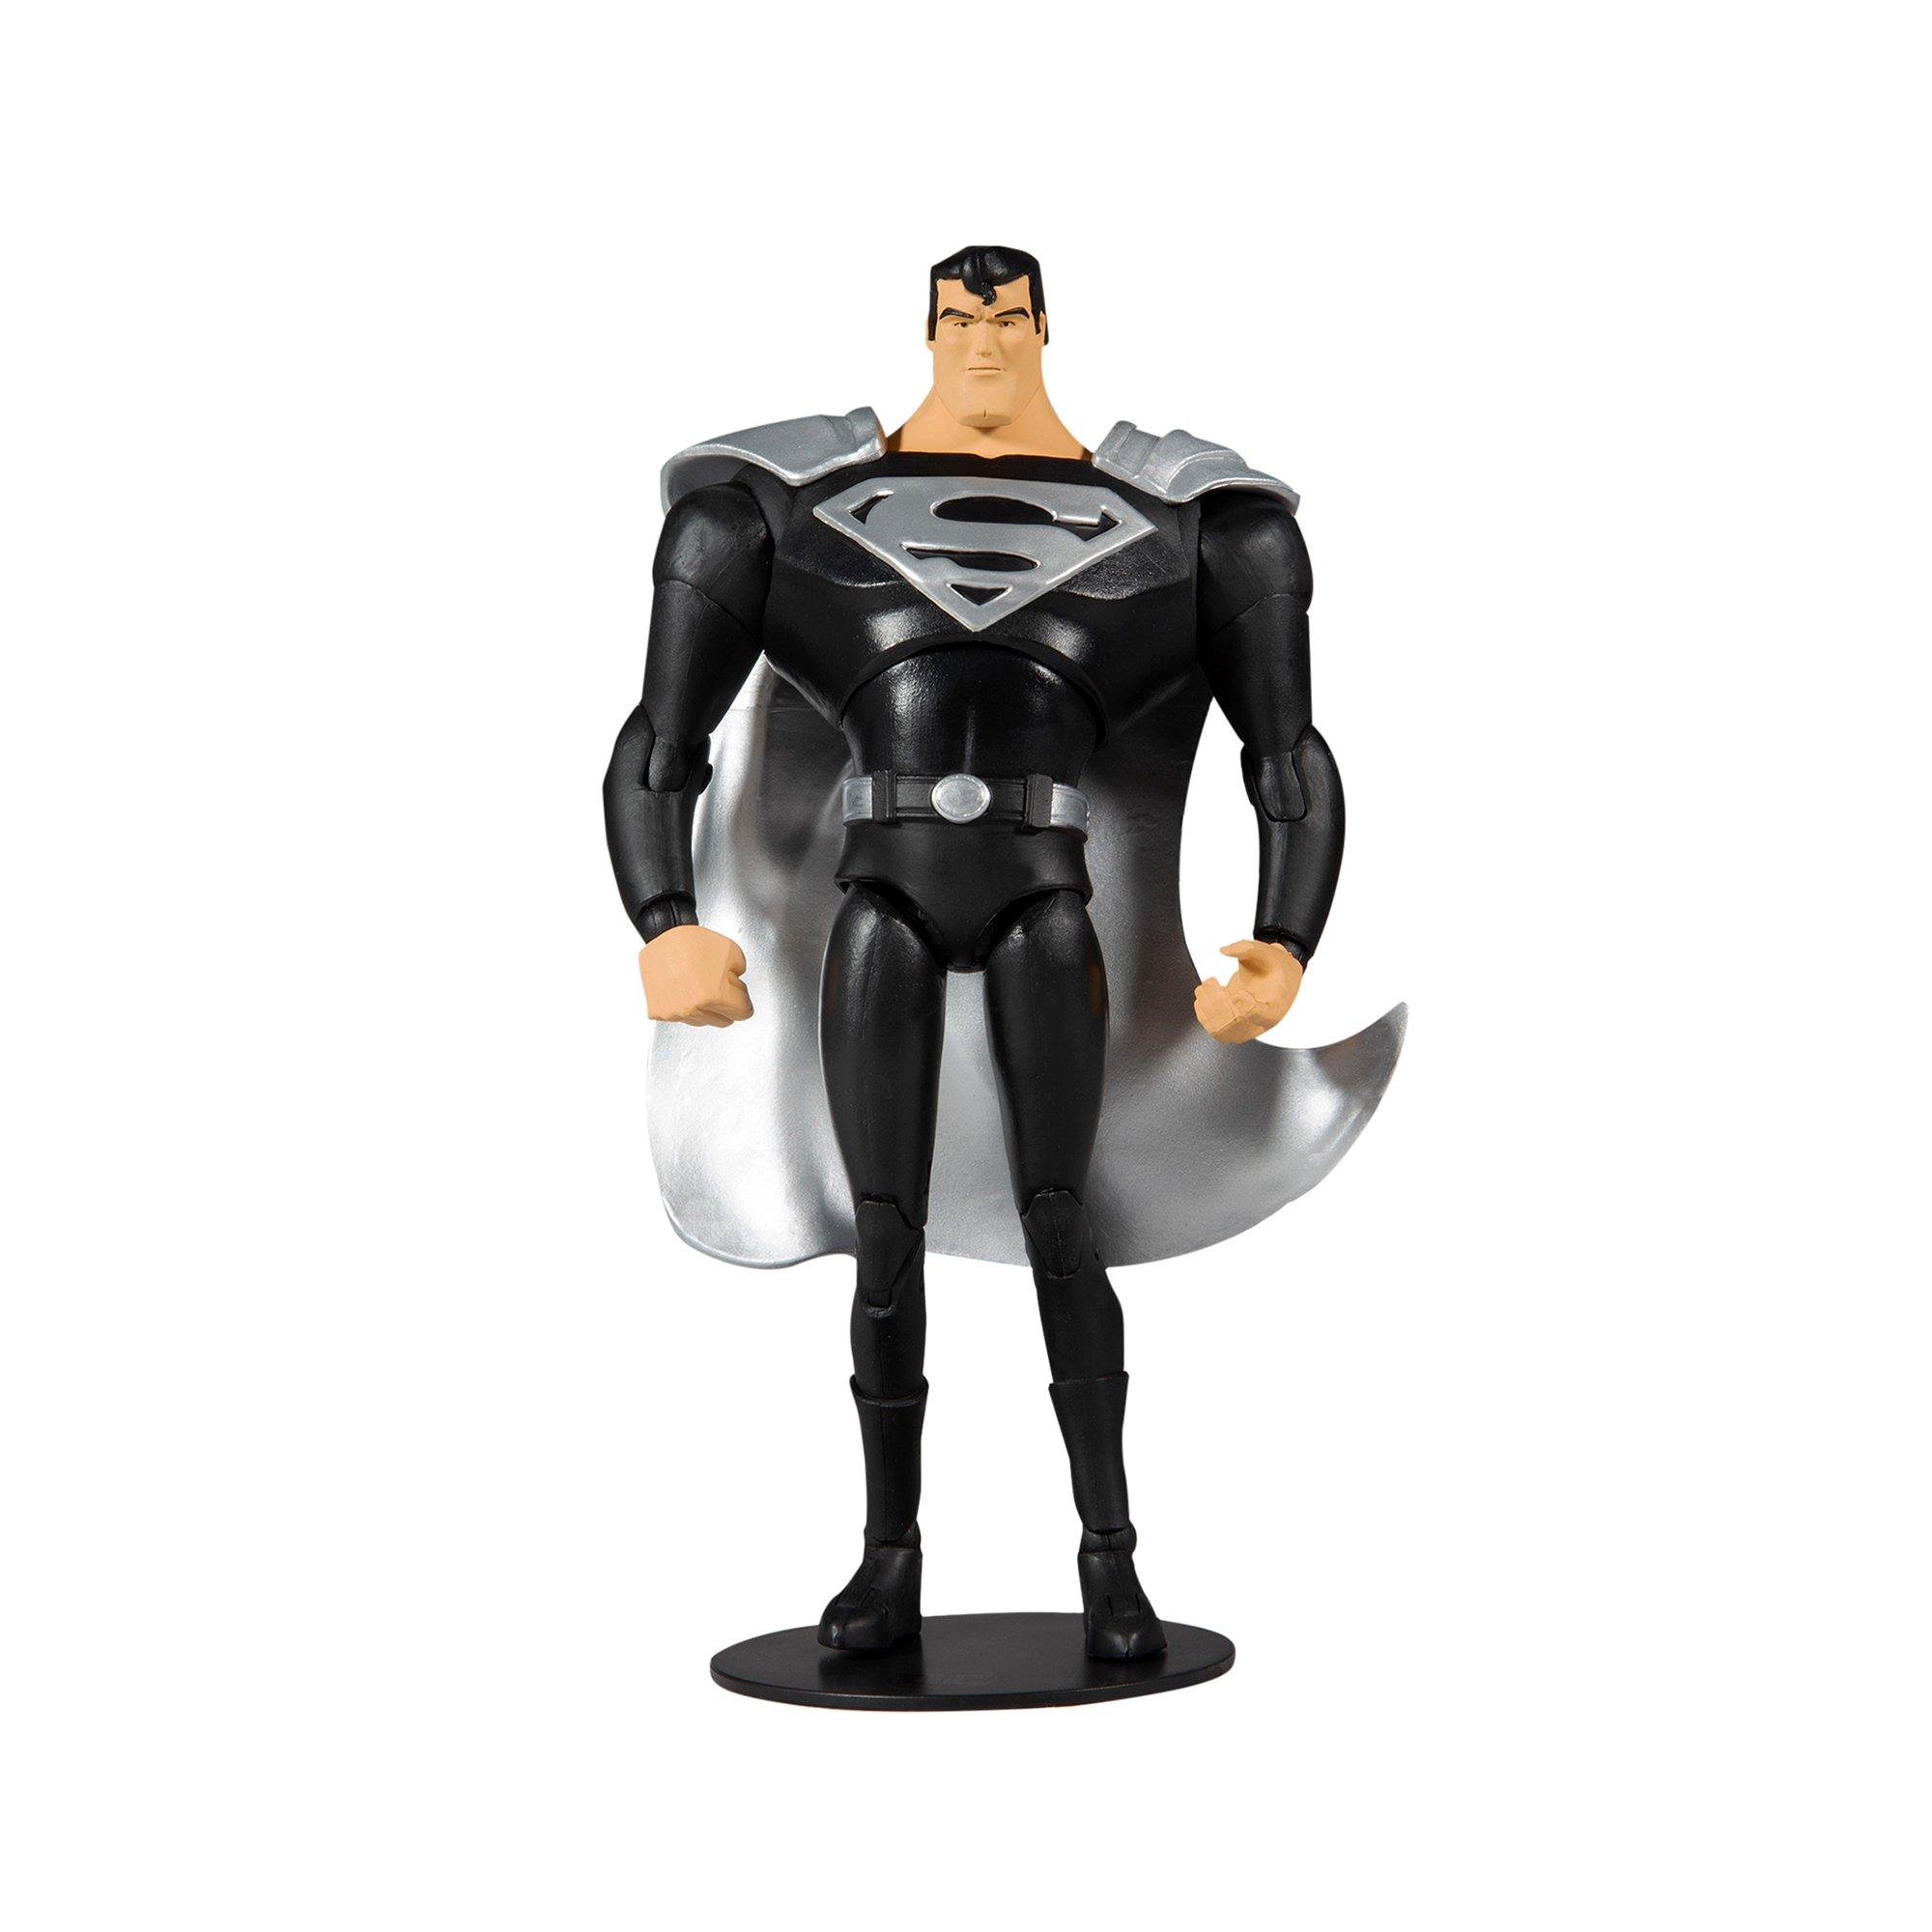 Justice League Animated Superman  Action Figure